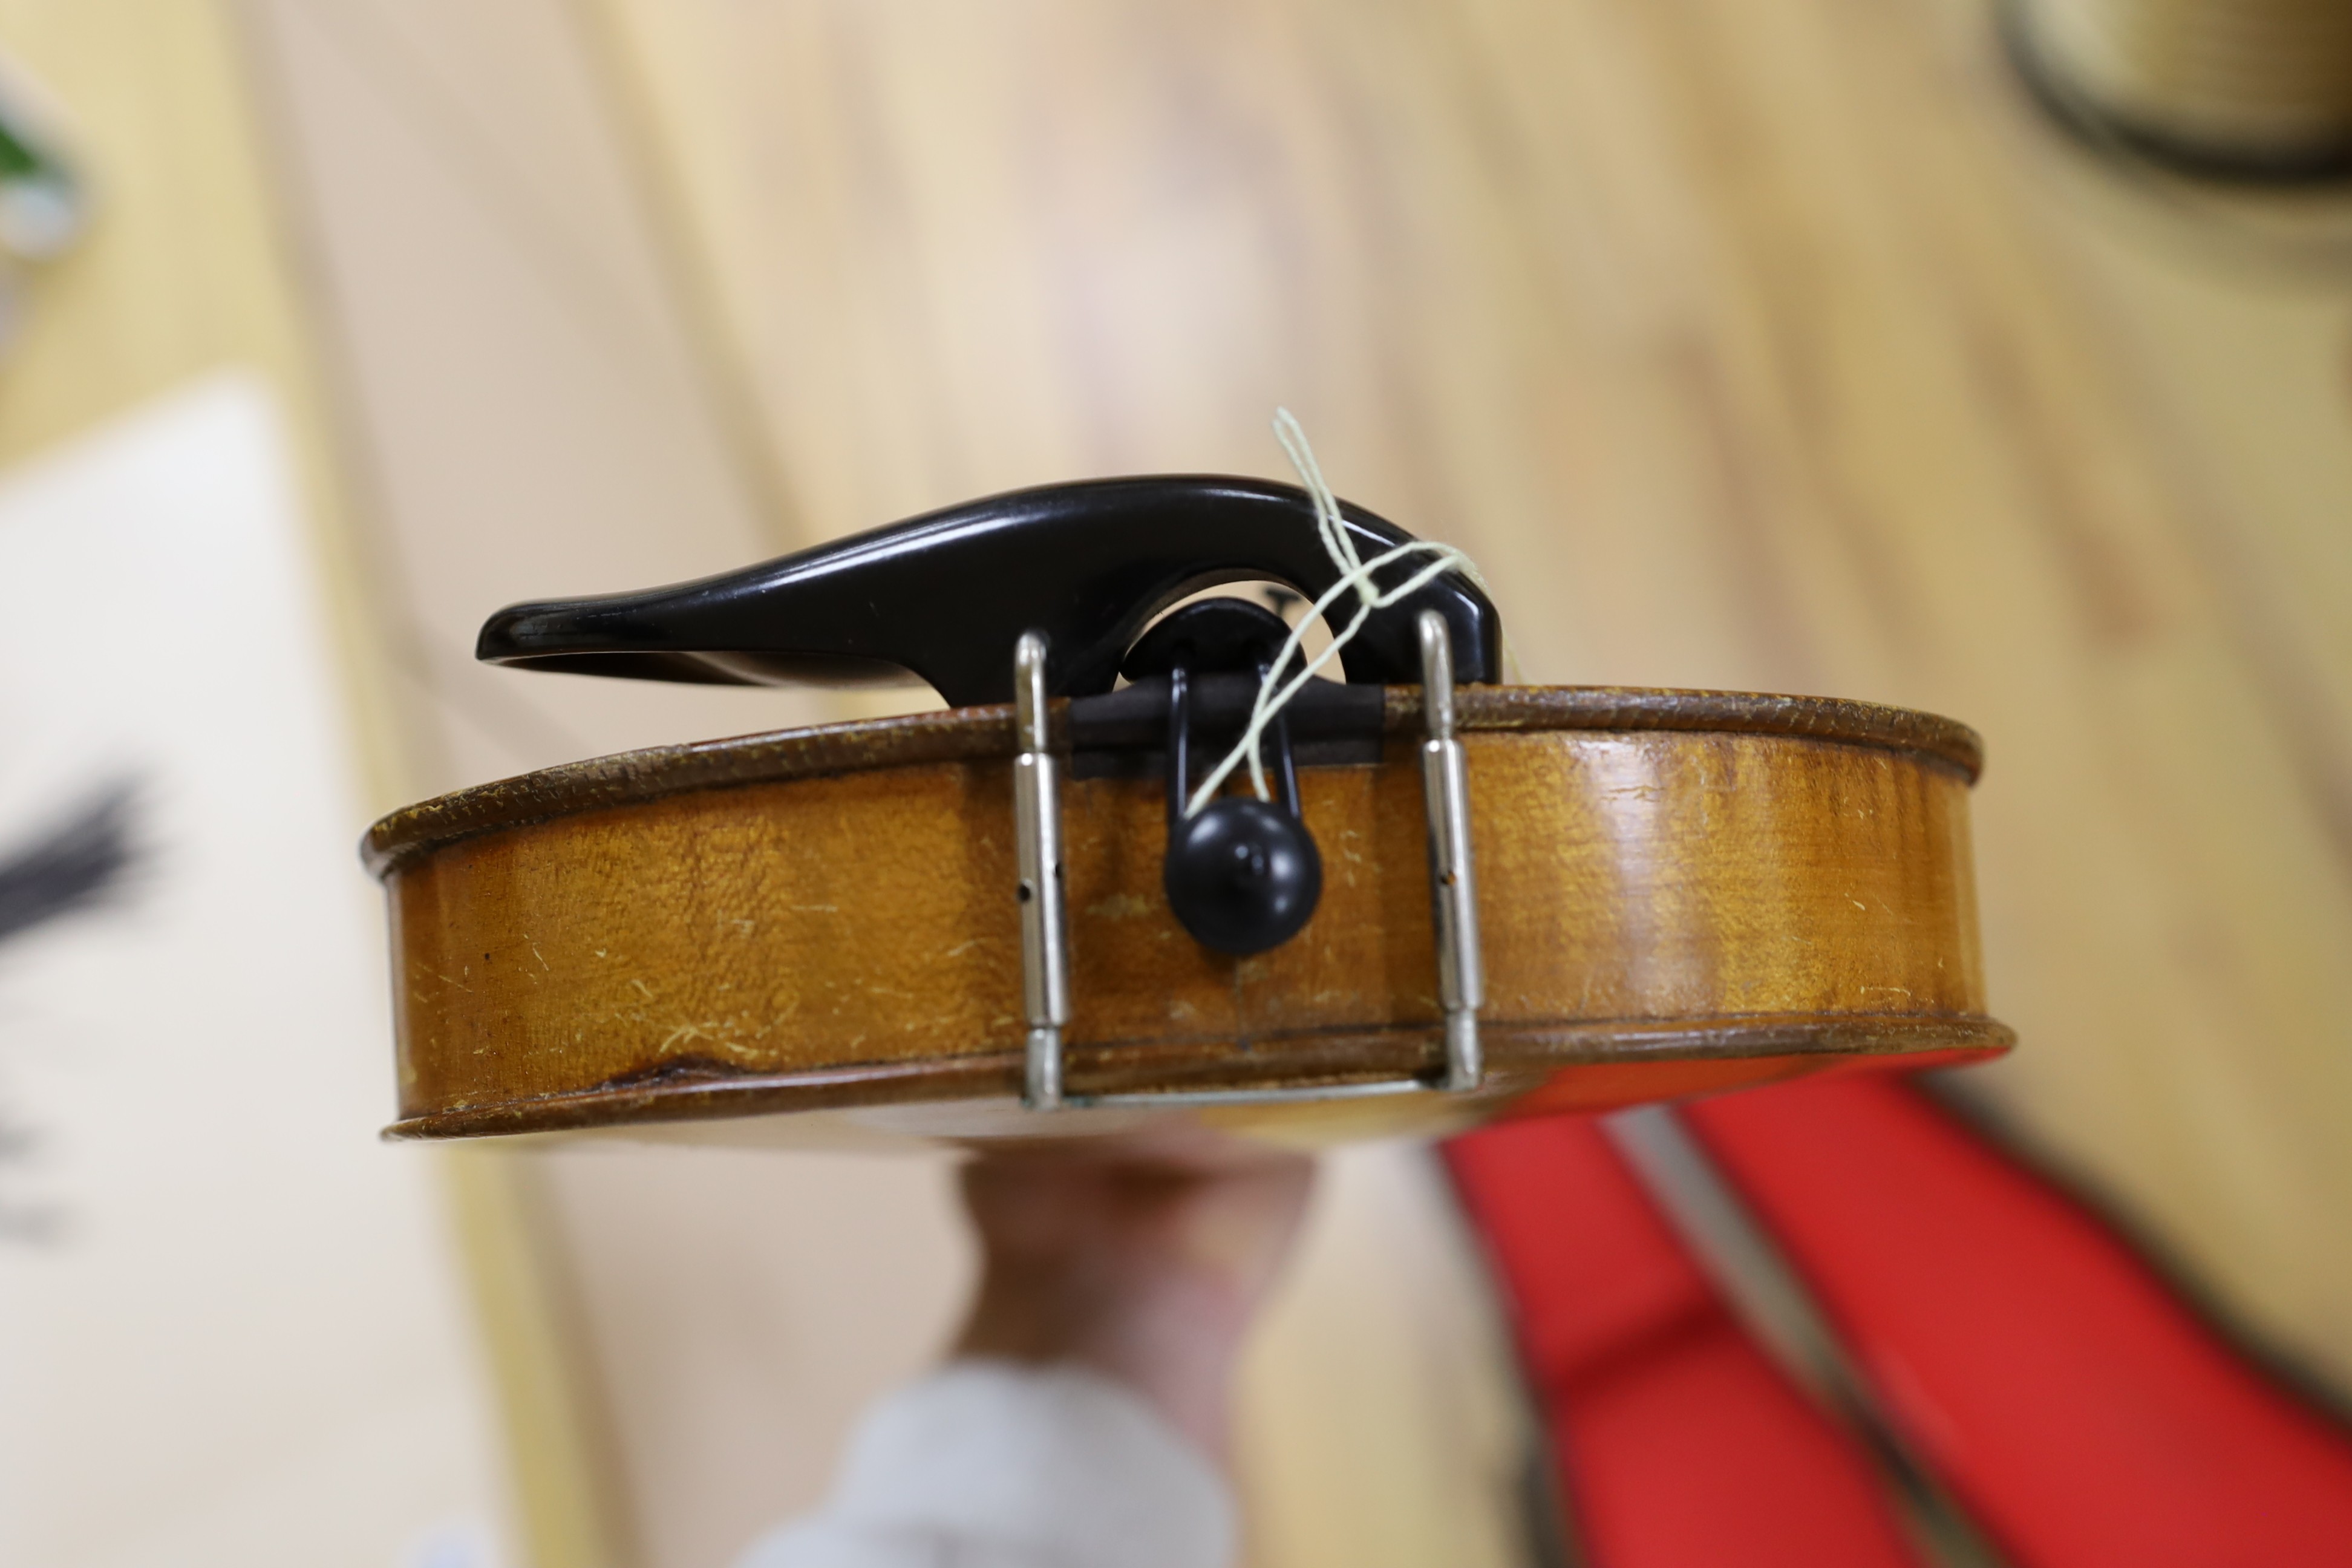 A cased student's violin, length of back 33 cm